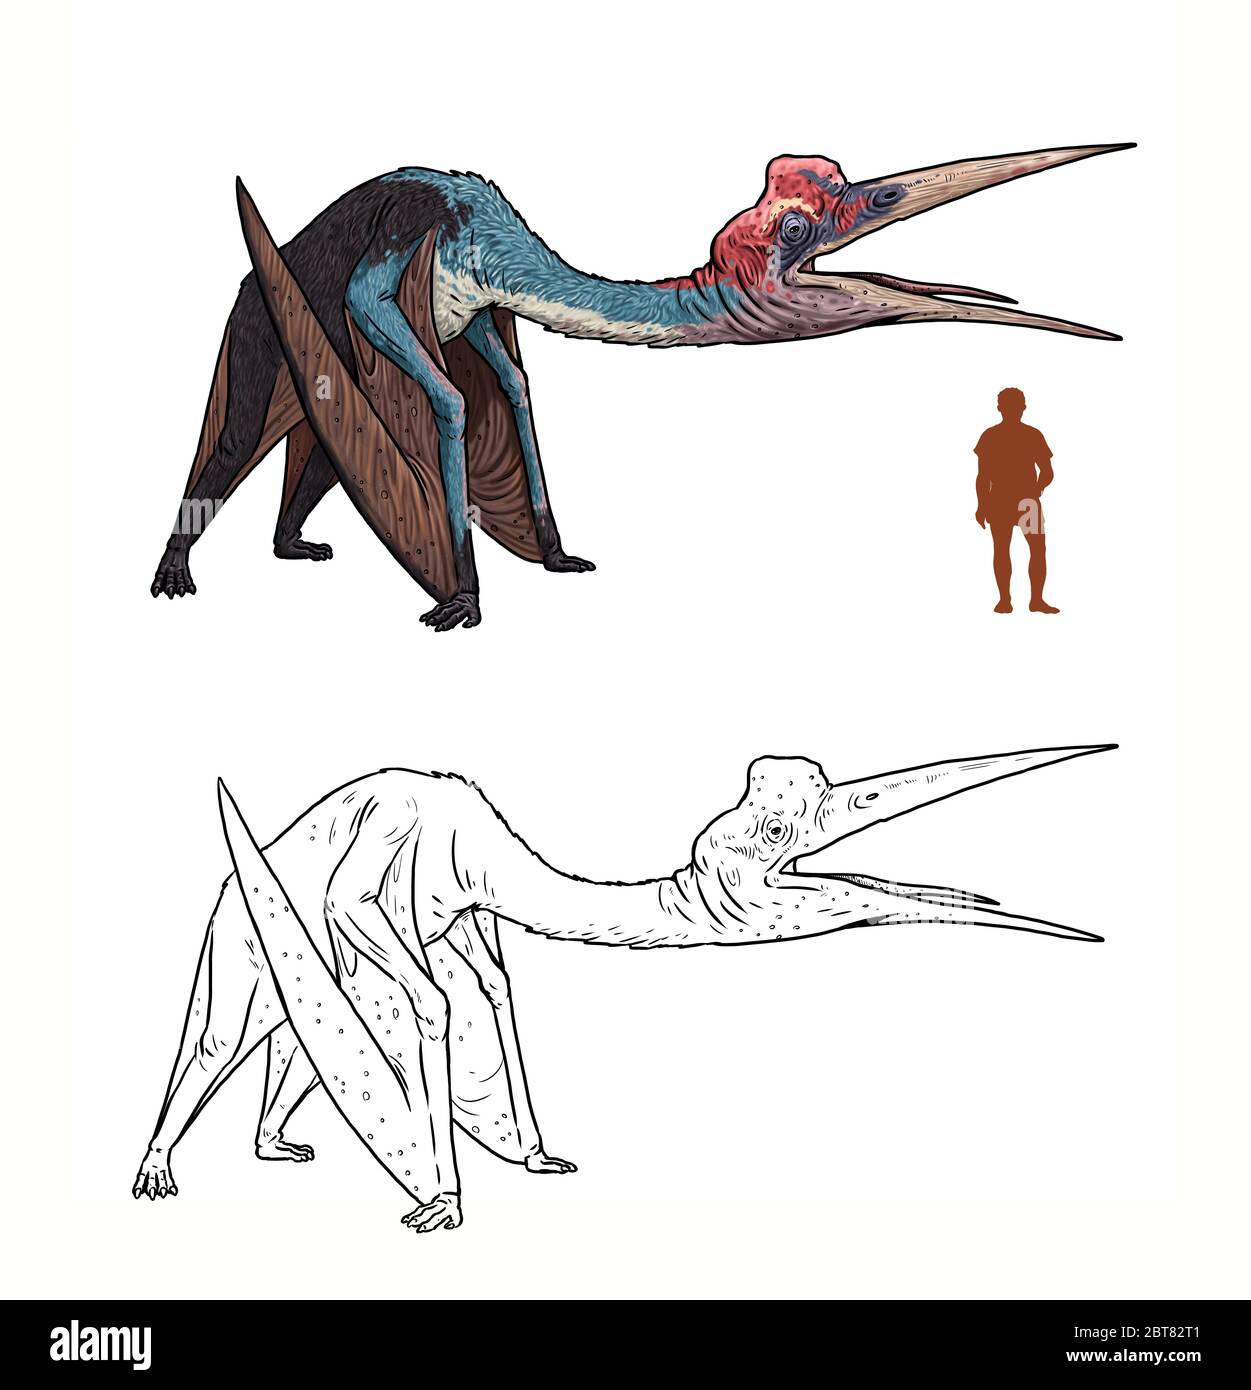 Pterosaur infographic  Prehistoric animals, Prehistoric creatures